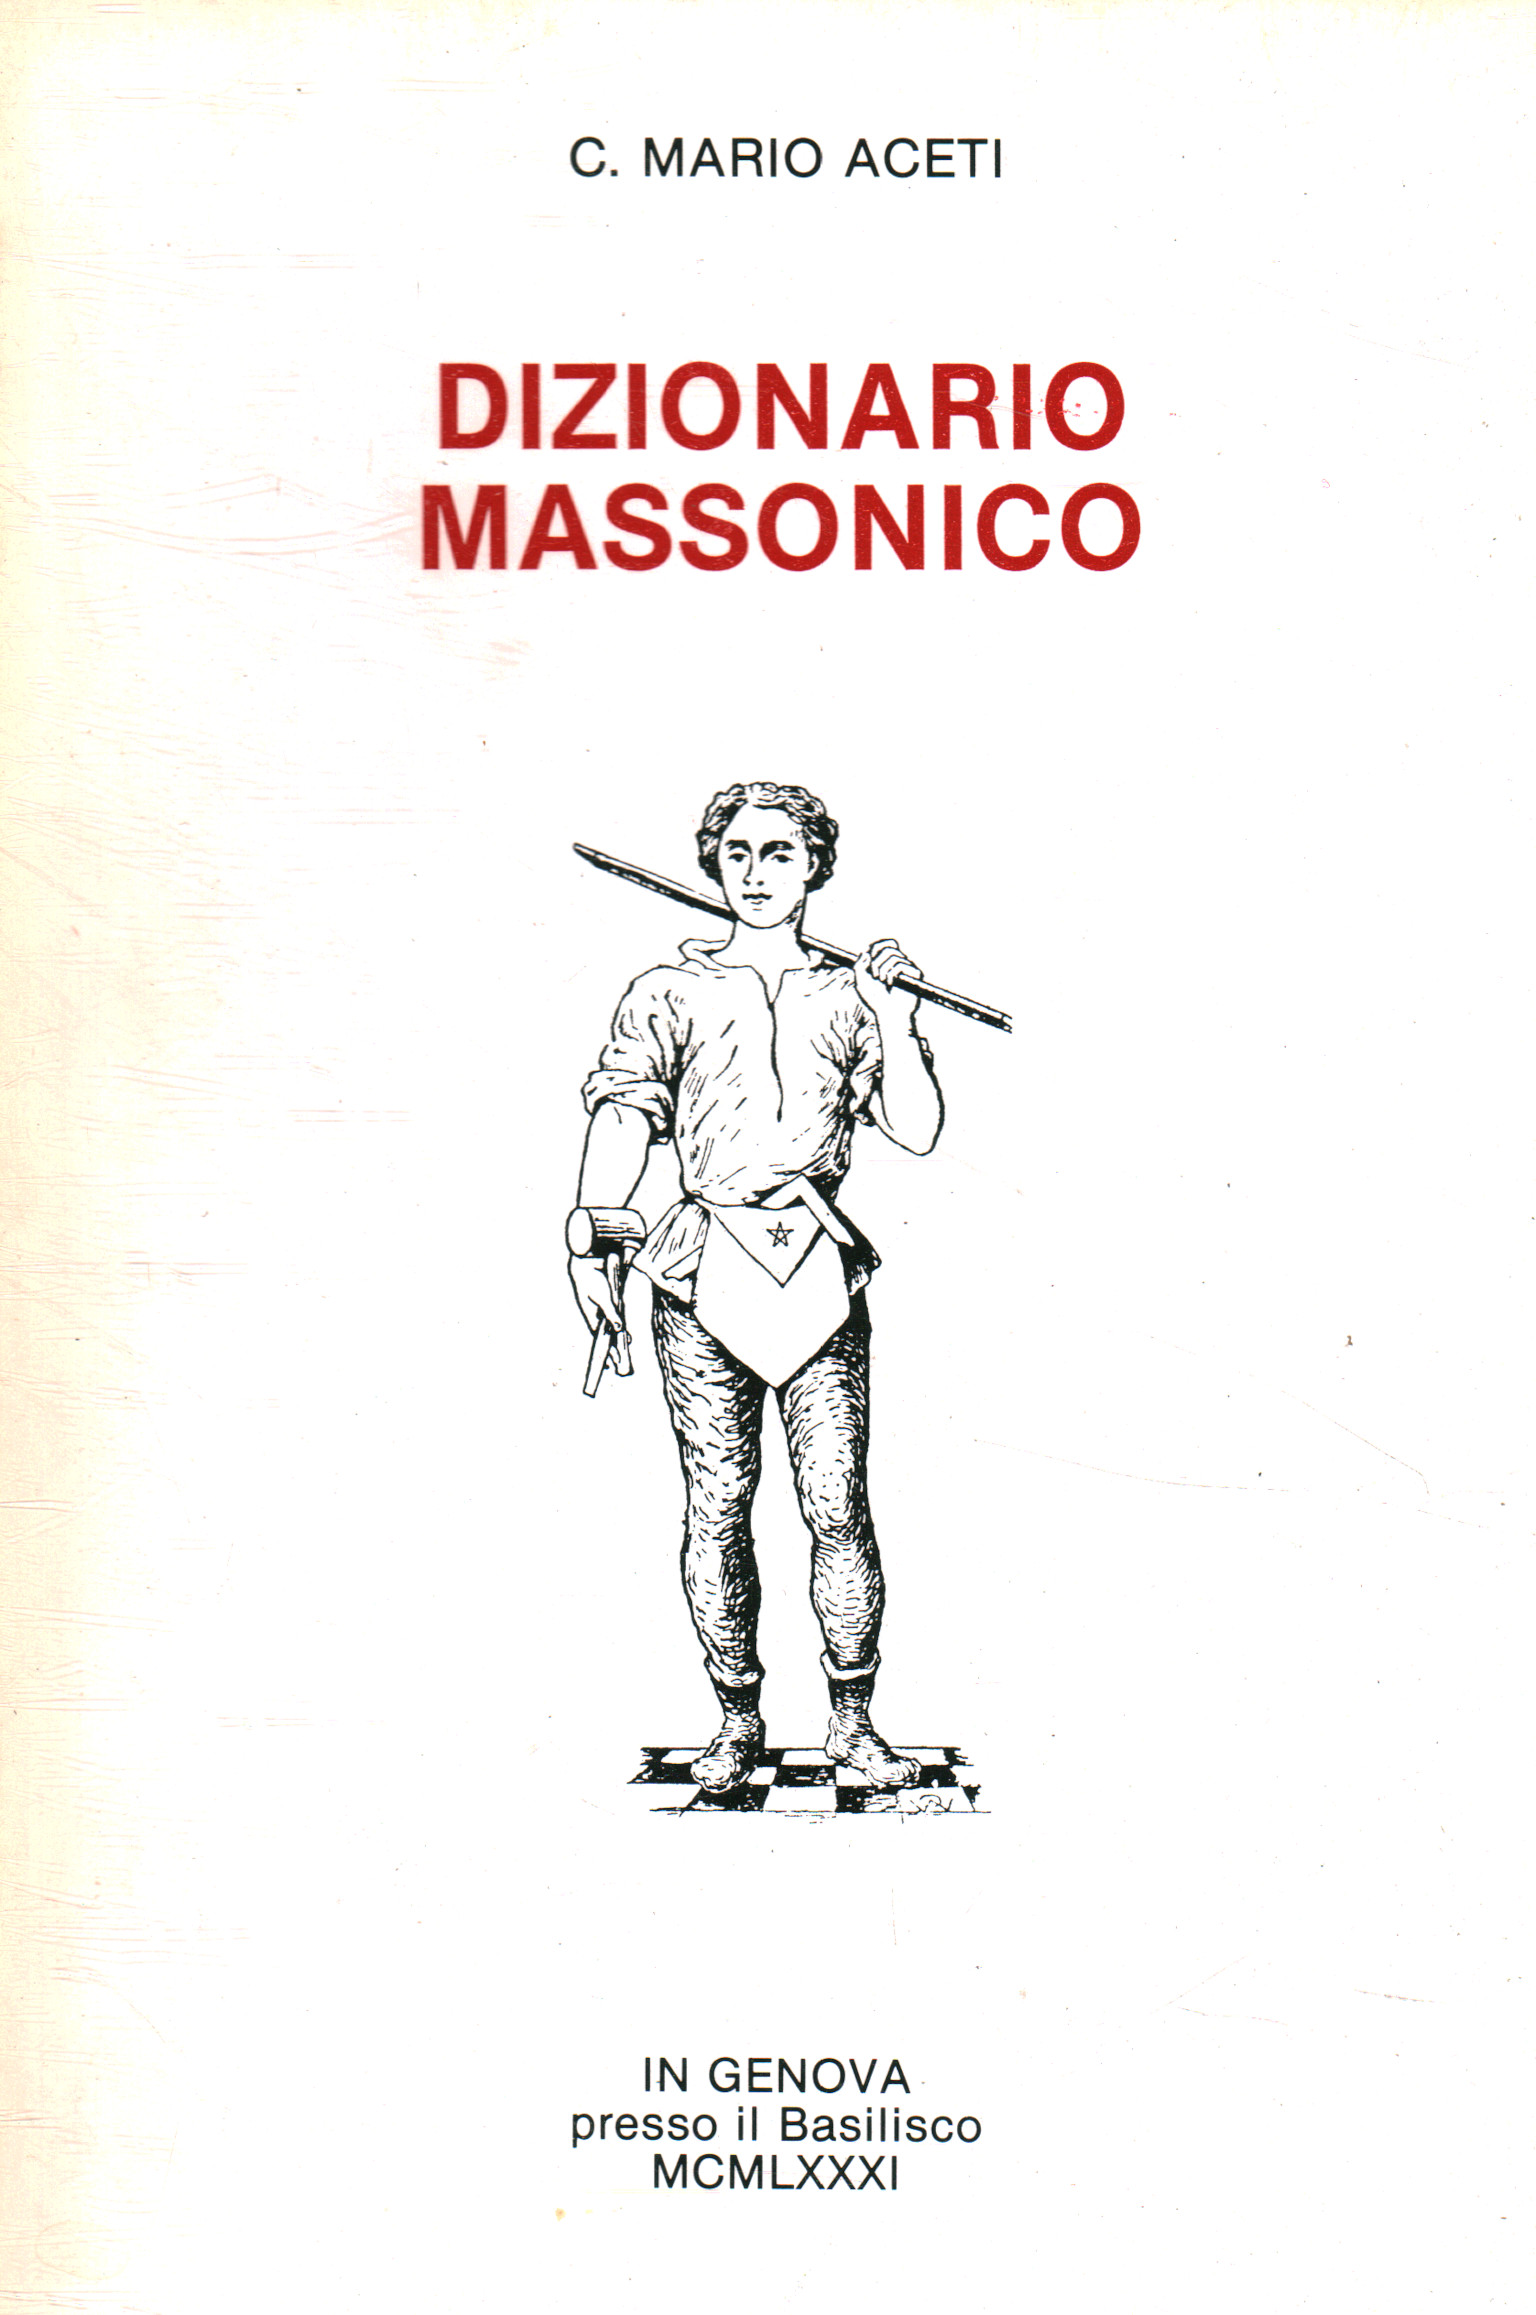 Masonic dictionary